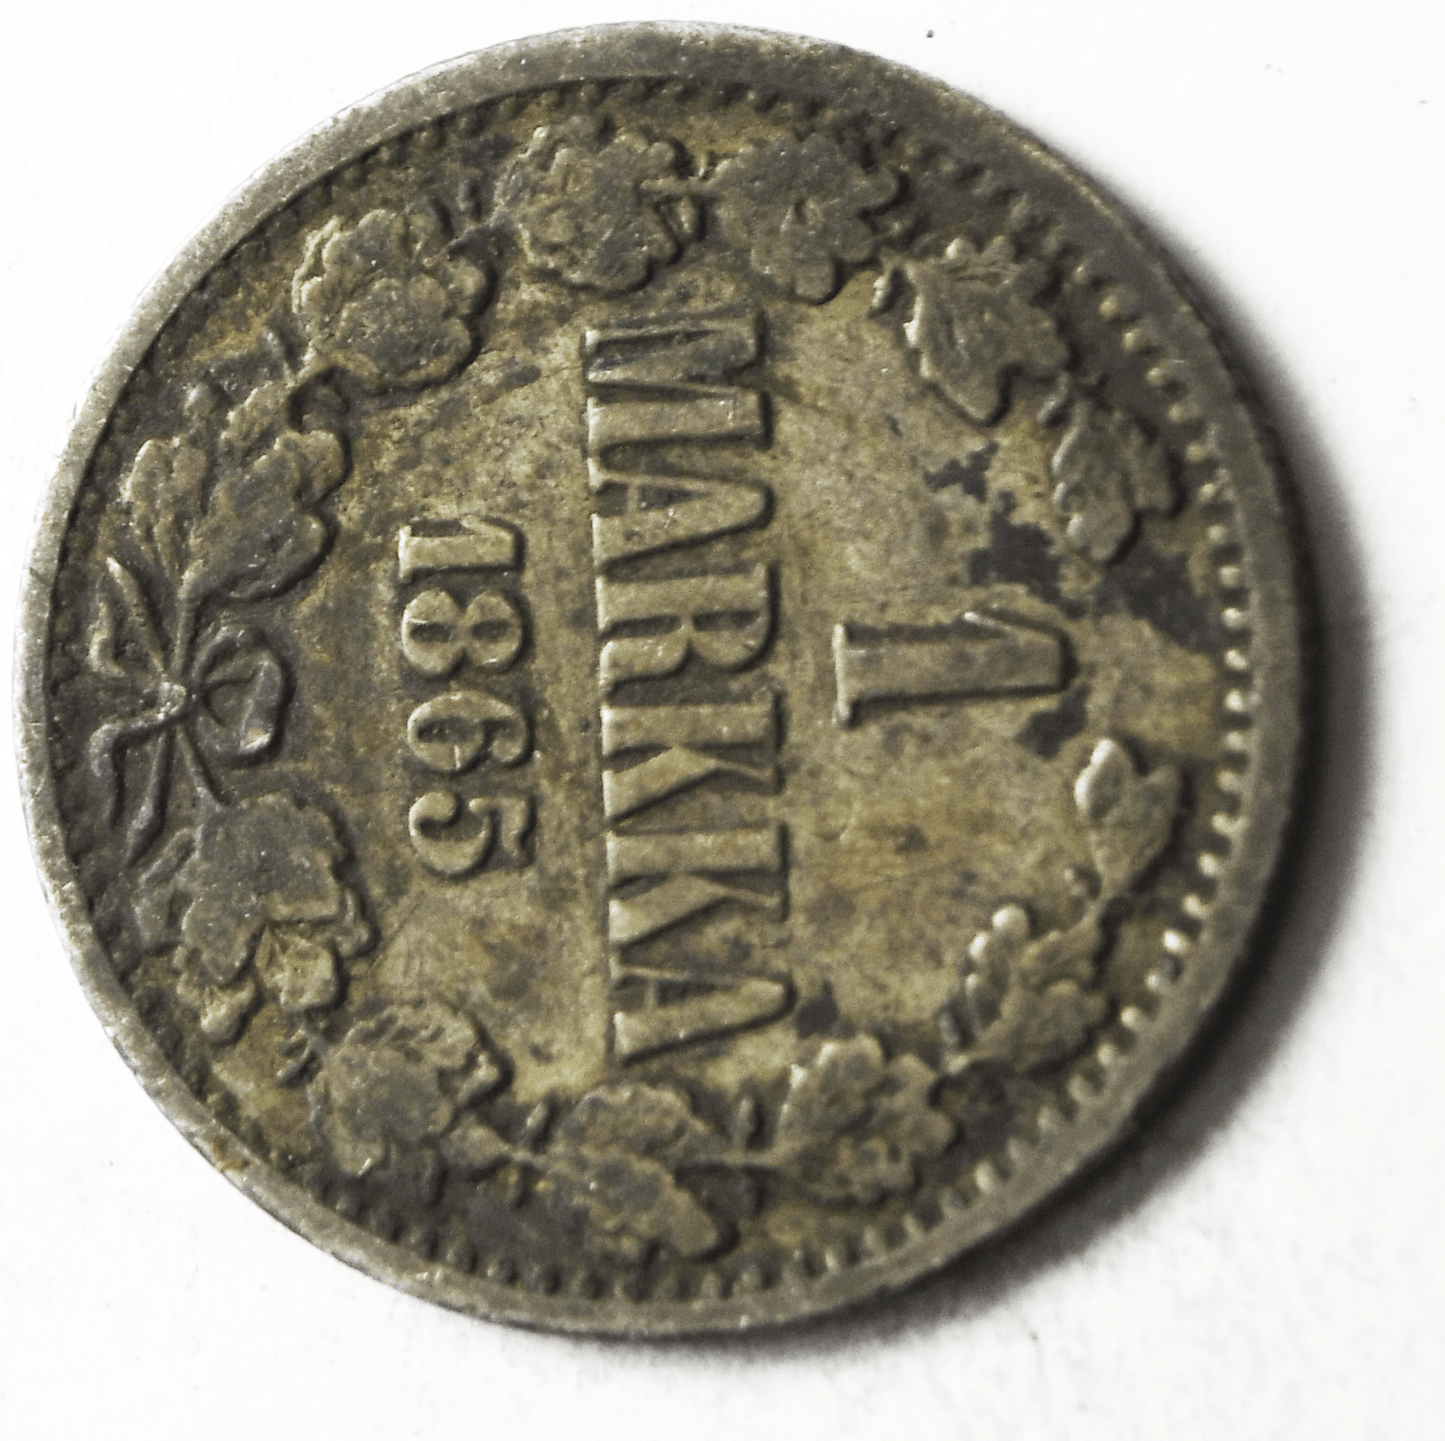 1965 S Finland Markka KM# 3.1 Silver Coin